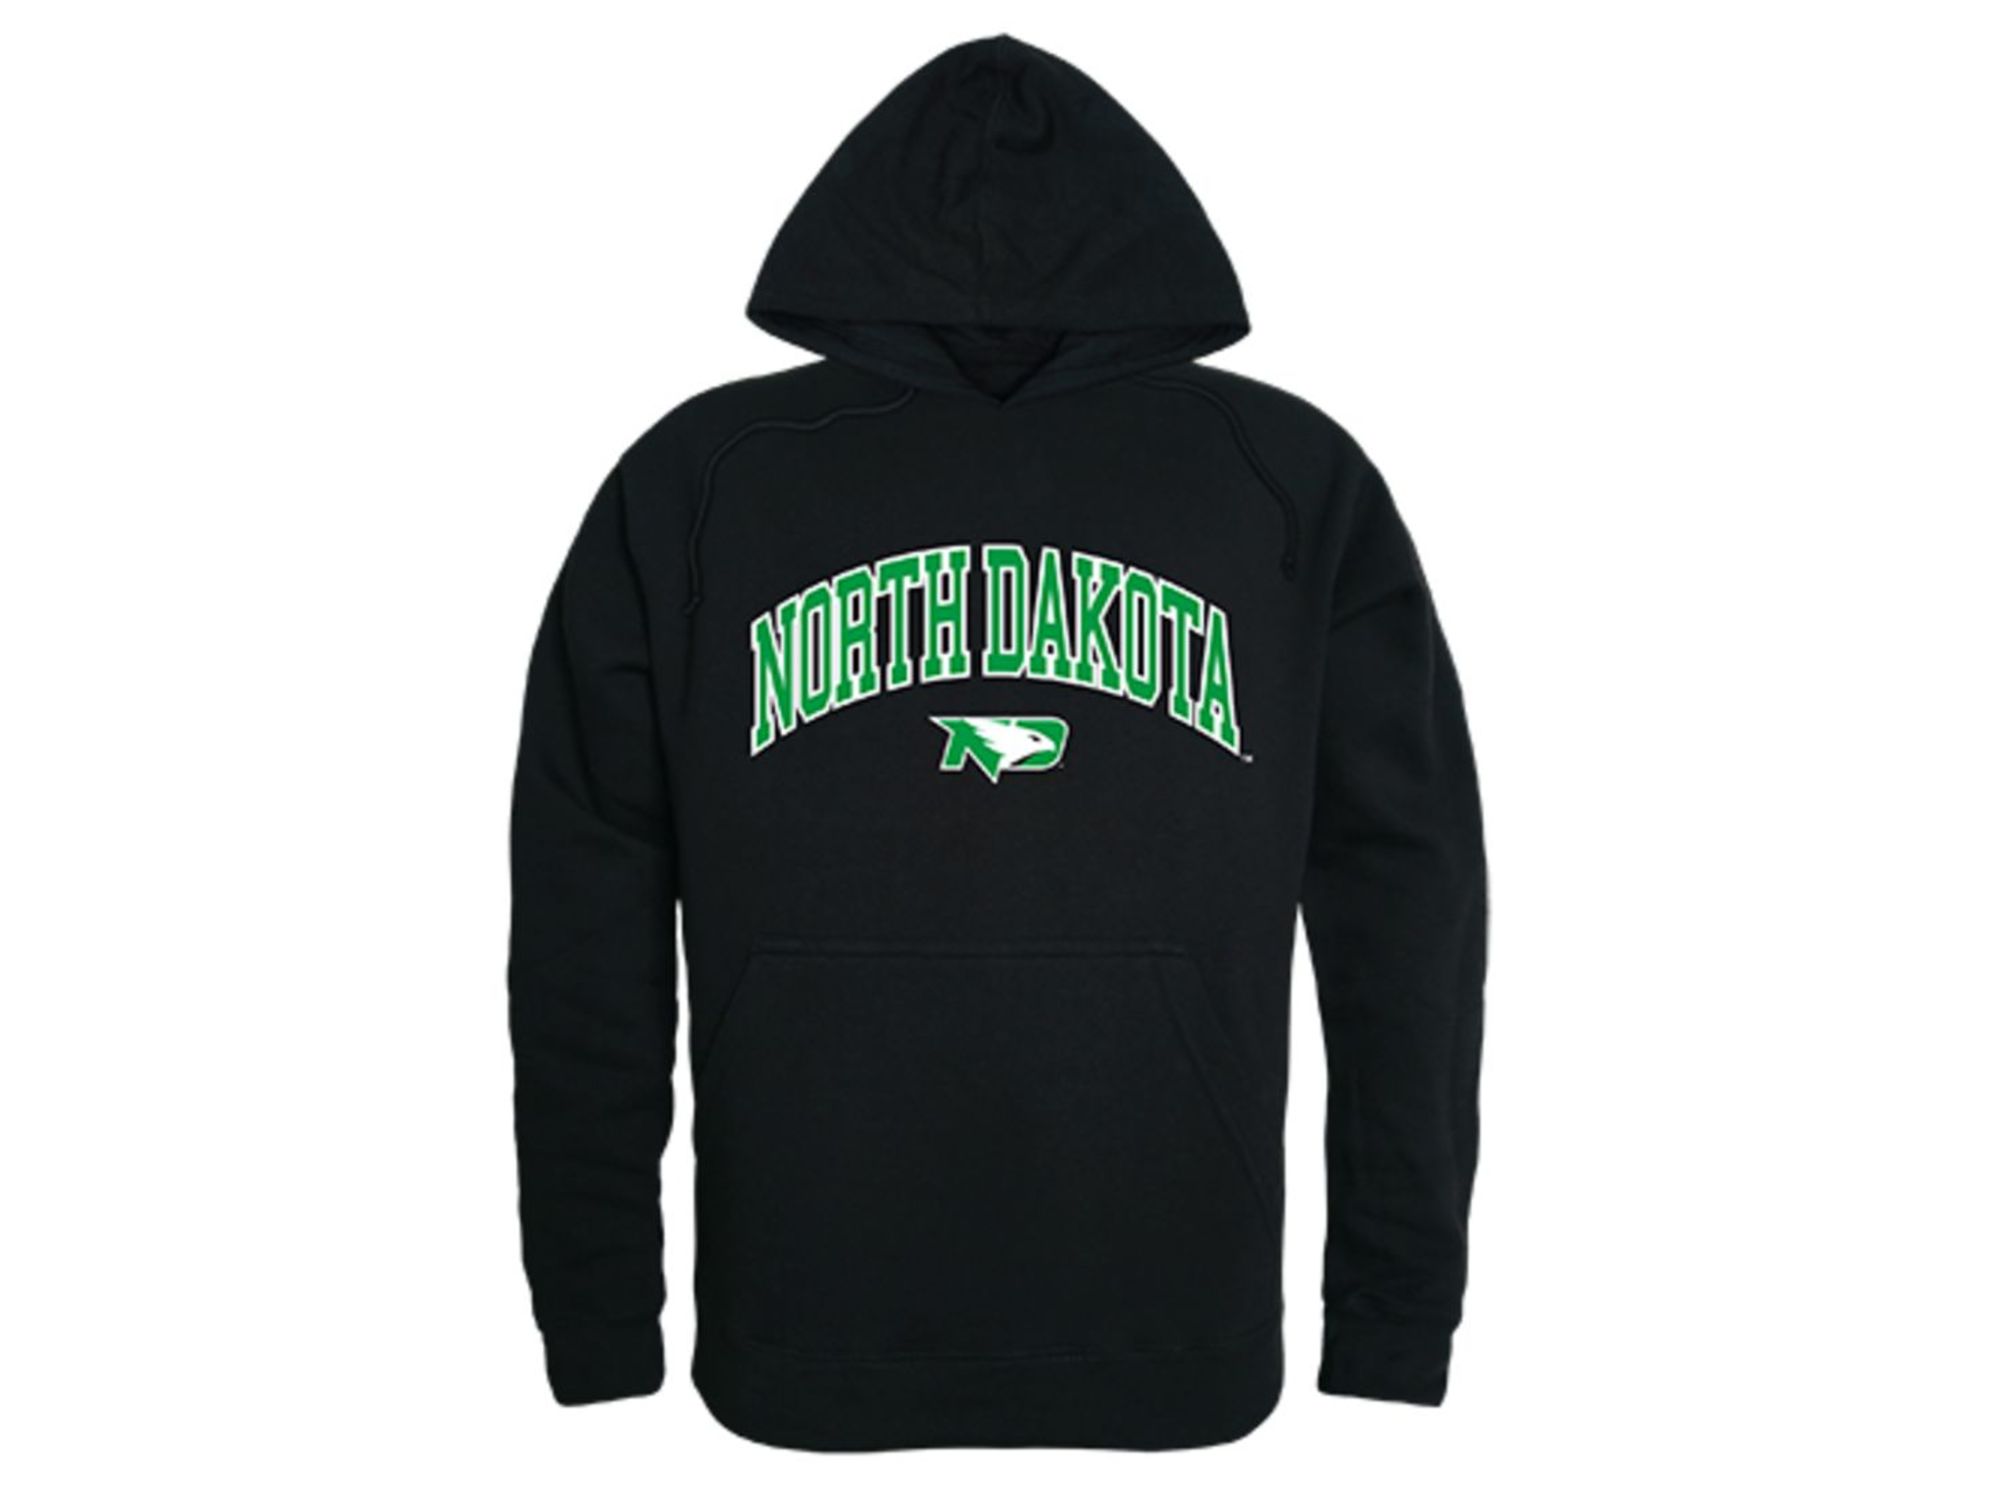 University of North Dakota Fighting Sioux Campus Hoodie Sweatshirt Black - image 1 of 2